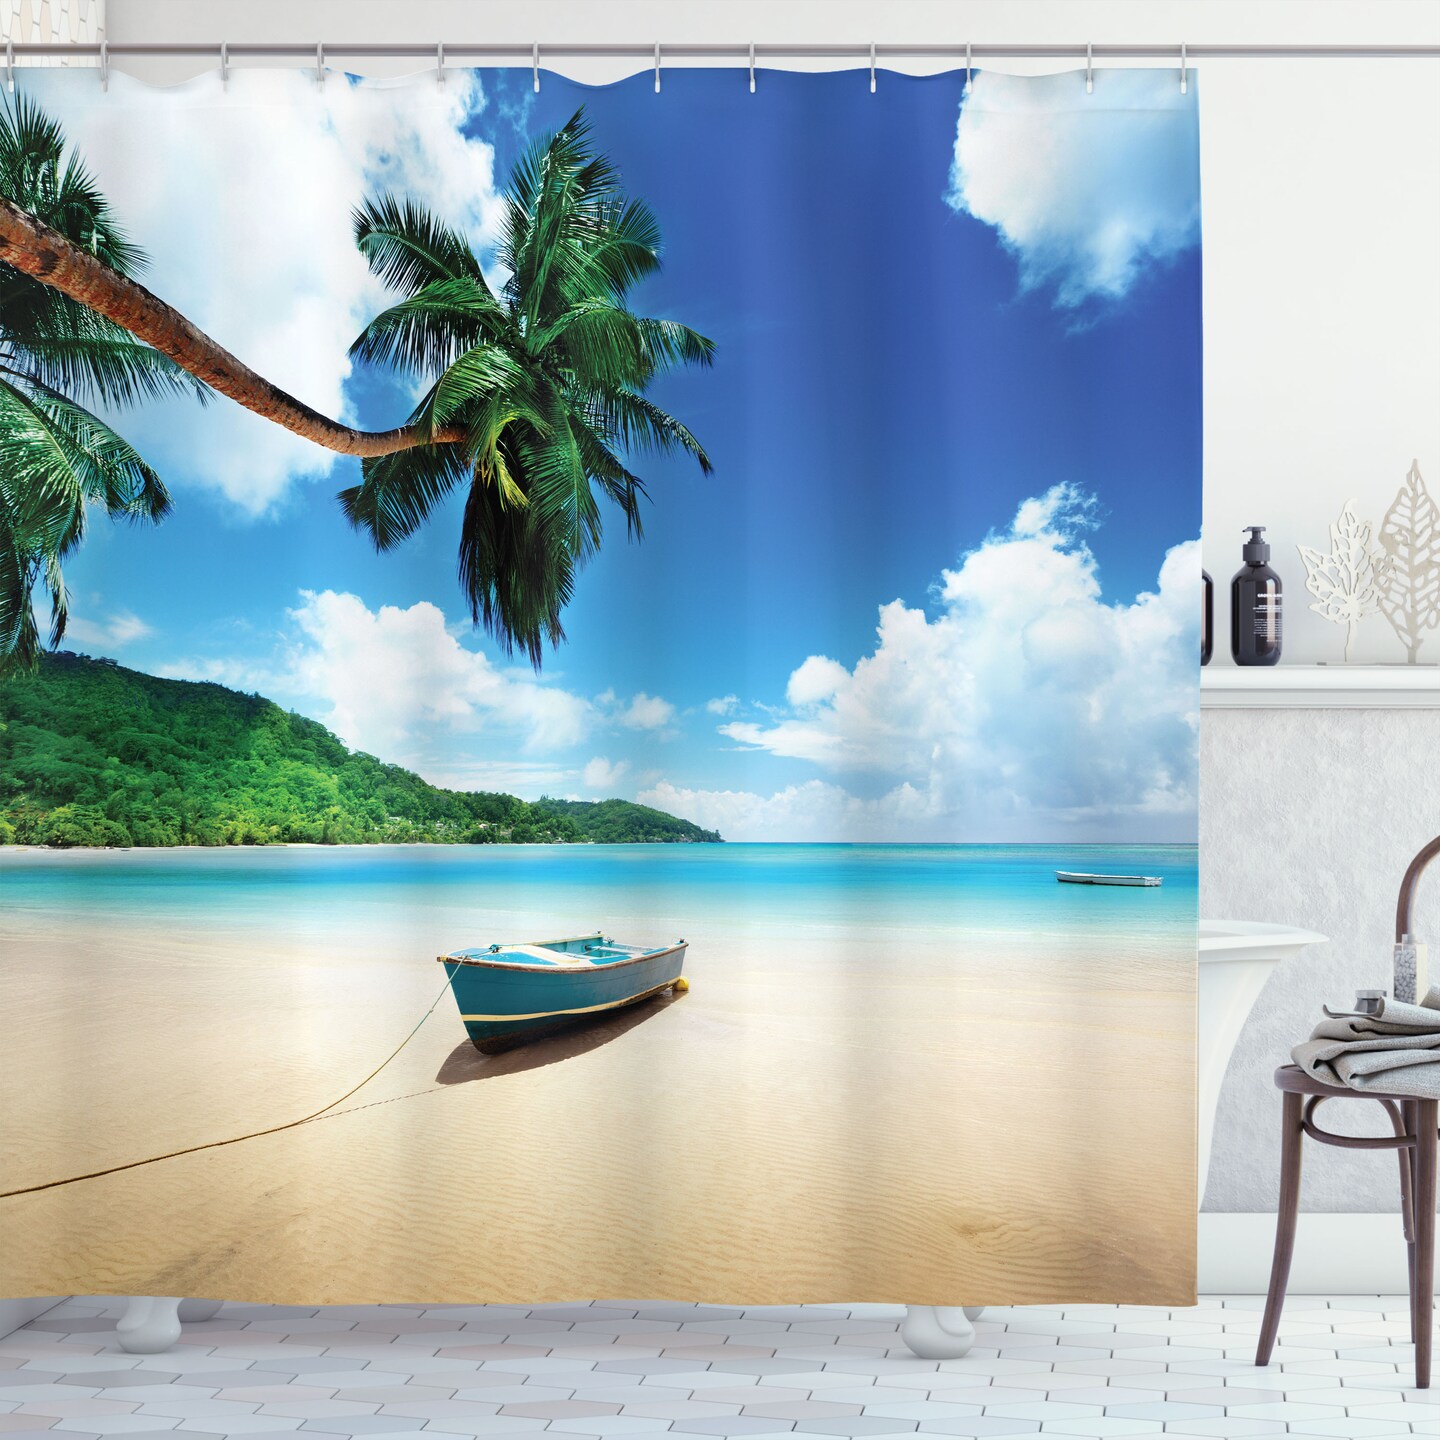 Ambesonne Beach Shower Curtain, Boat on The Beach Mahe Island Lagoon  Seychelles Exotic Shoreline Image, Cloth Fabric Bathroom Decor Set with  Hooks, 69 W x 75 L, Blue Green Sand Brown